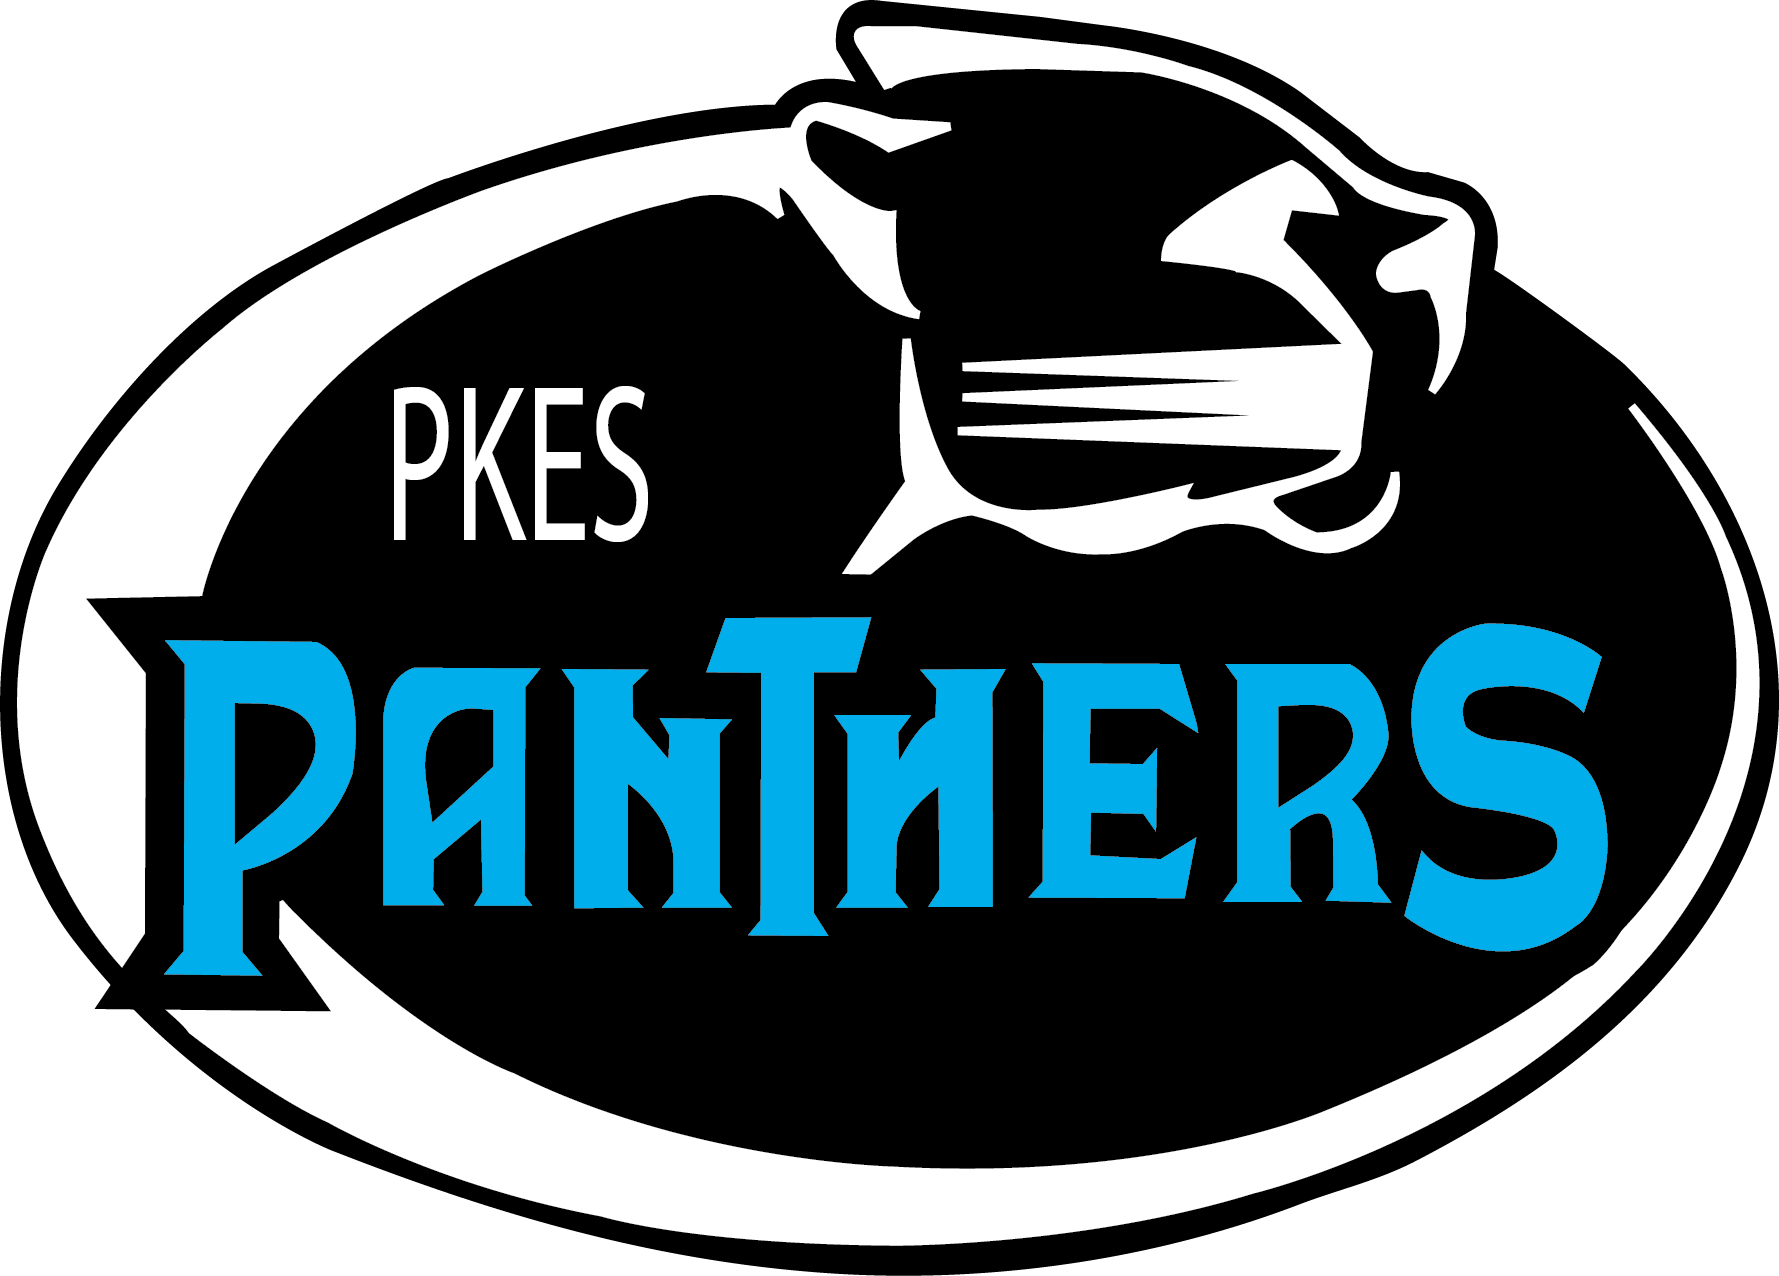 Pleasant Knoll Elementary School - Pkes Panthers (1779x1276)